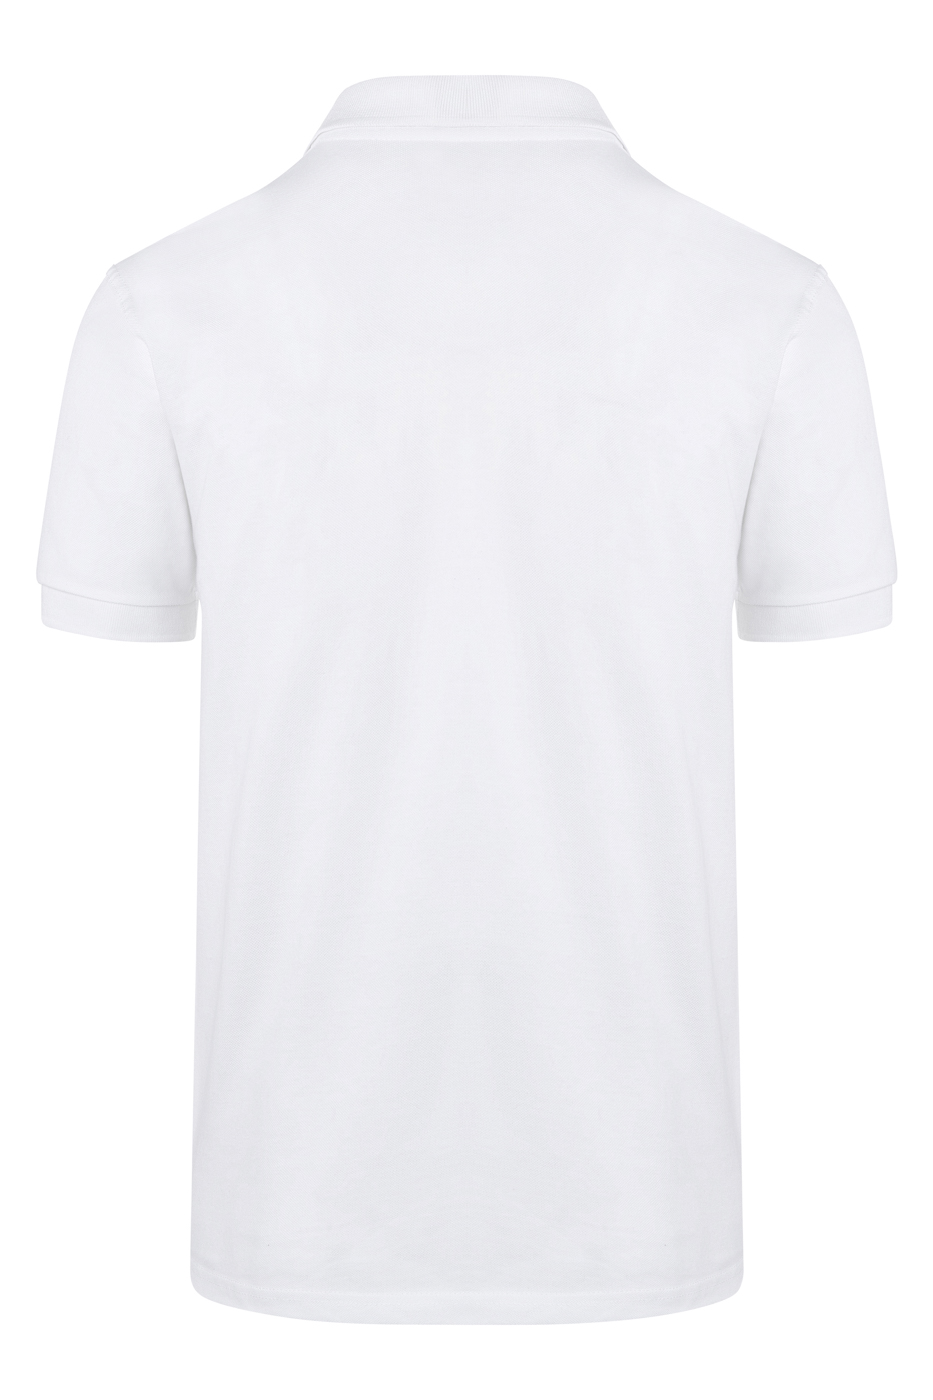 Herren Workwear Poloshirt Basic - Größe: L